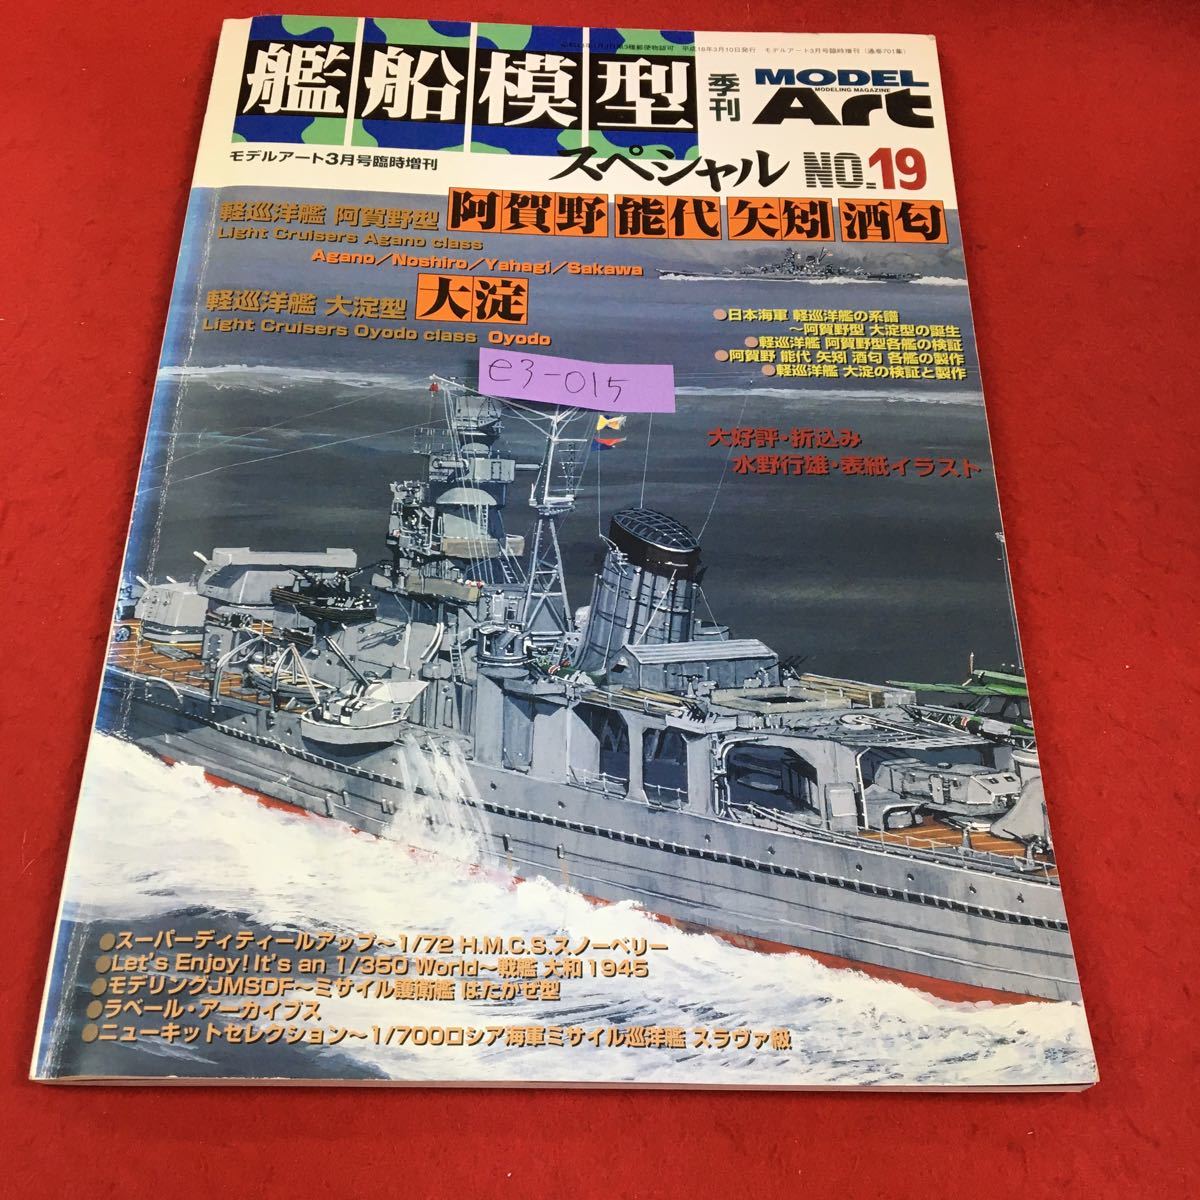 e3-015 モデルアート３月臨時増刊 戦艦模型スペシャル 平成18年3月10日発行 ※2_画像1